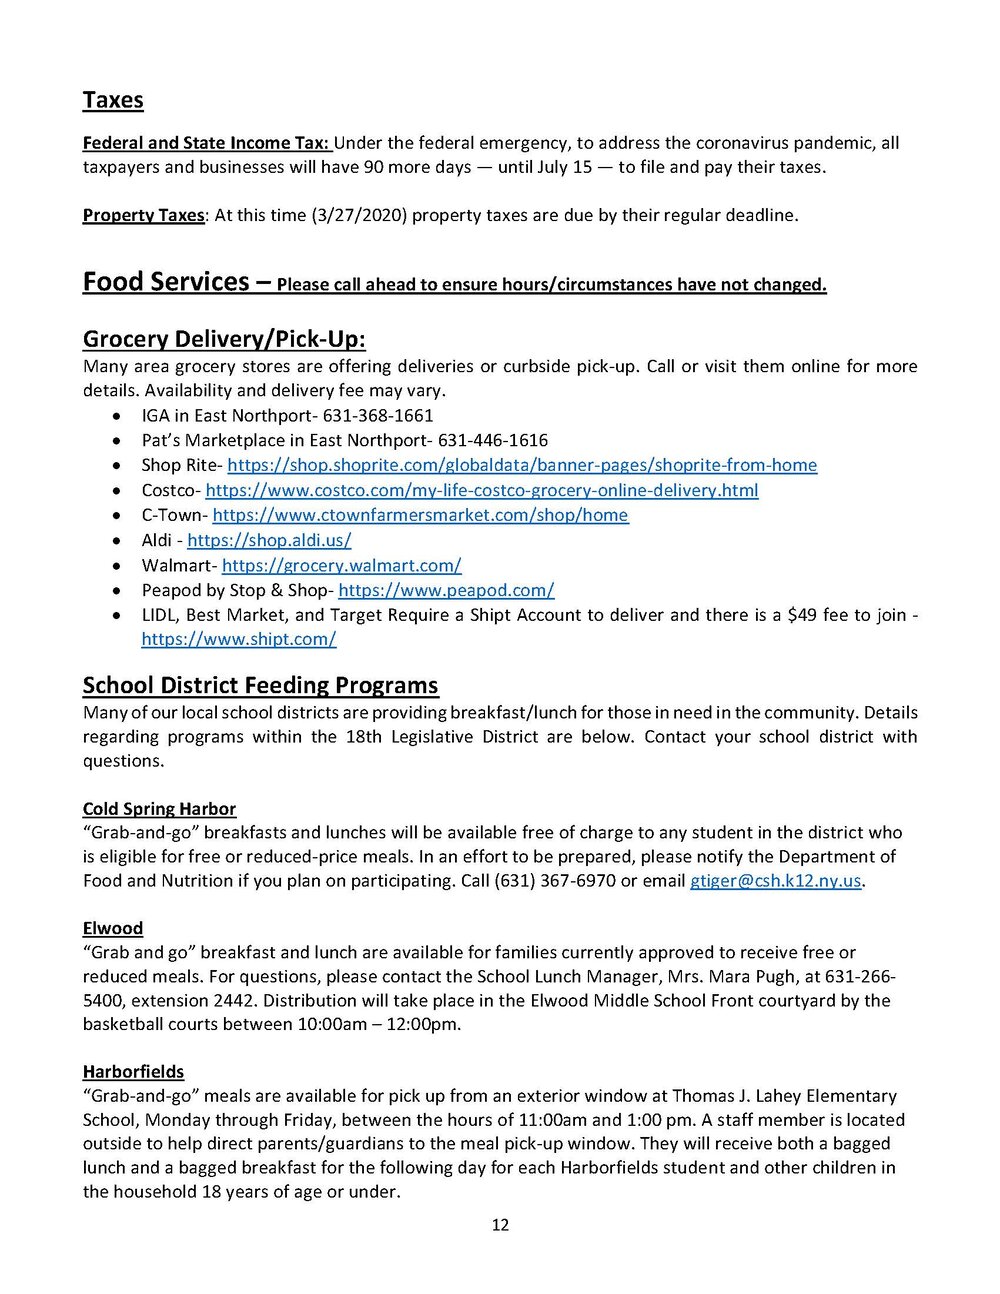 Coronavirus Resource Guide (PDF)_202003271735148252_Page_12.jpg